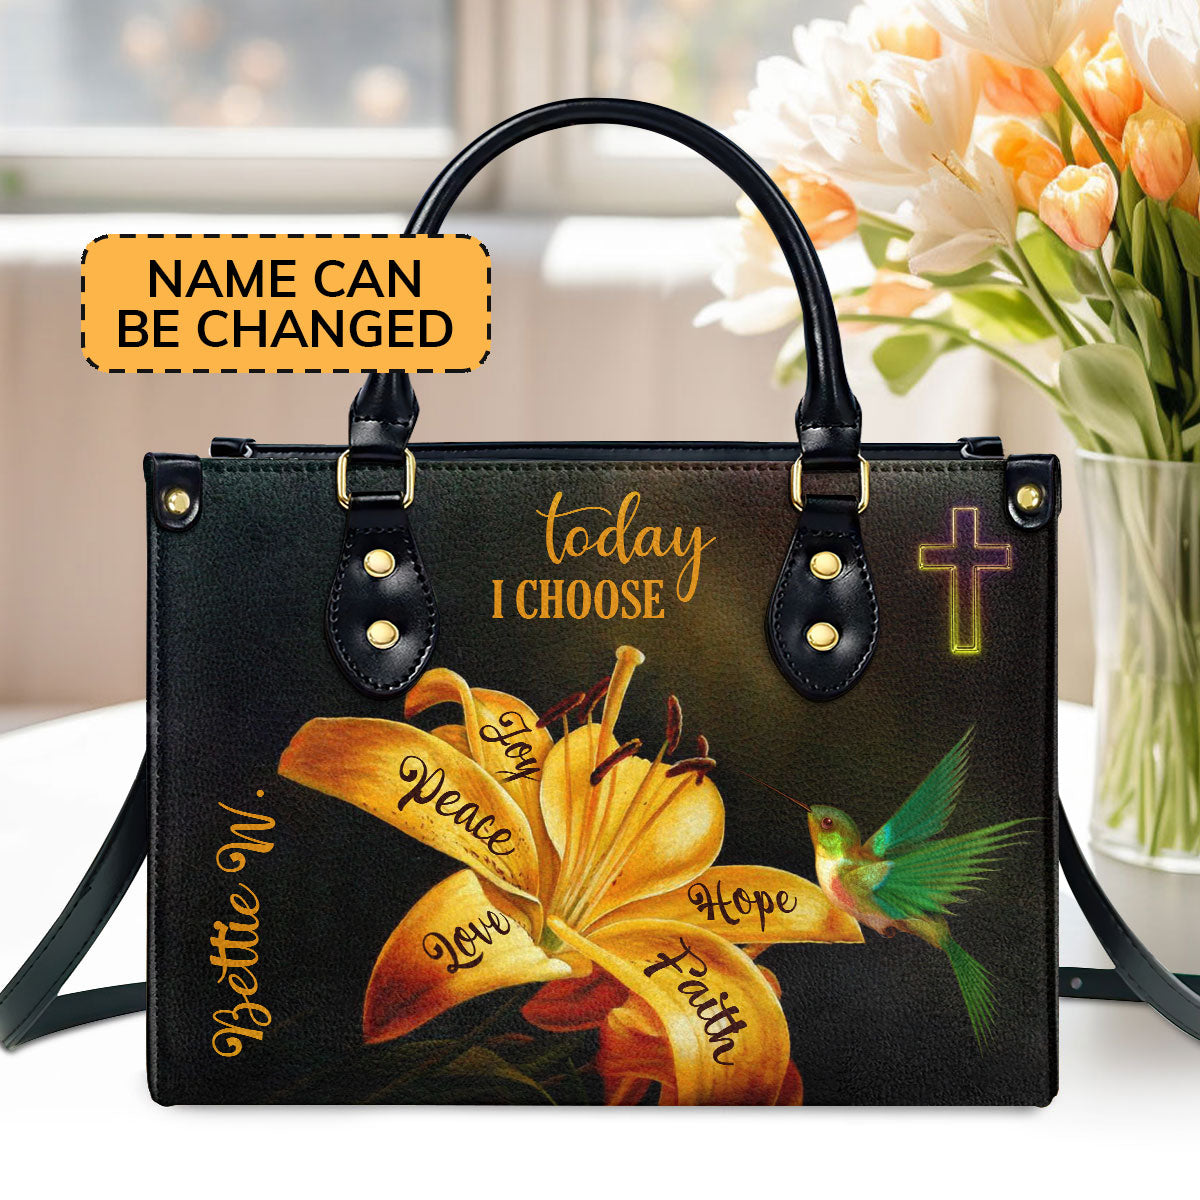 Classic and stylish Bettie Page clutch/handbag by Lola Ramona